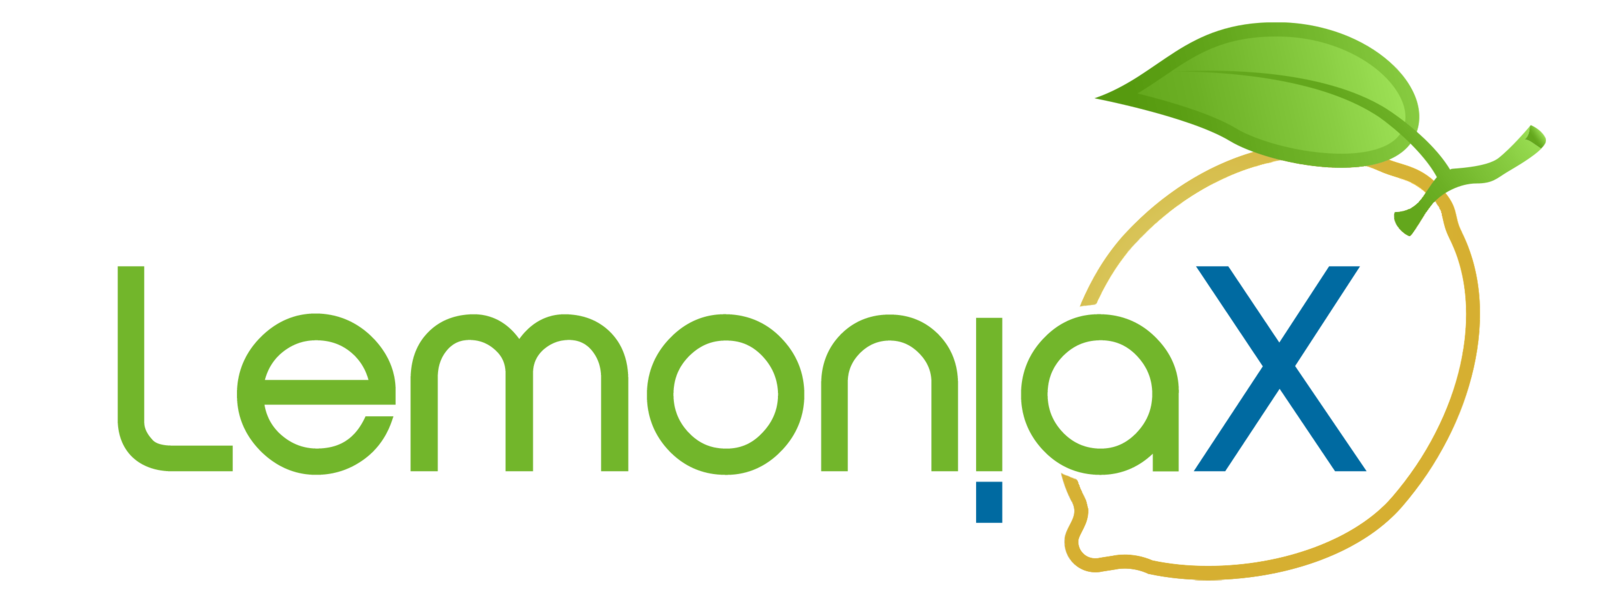 Logo LemoniaX